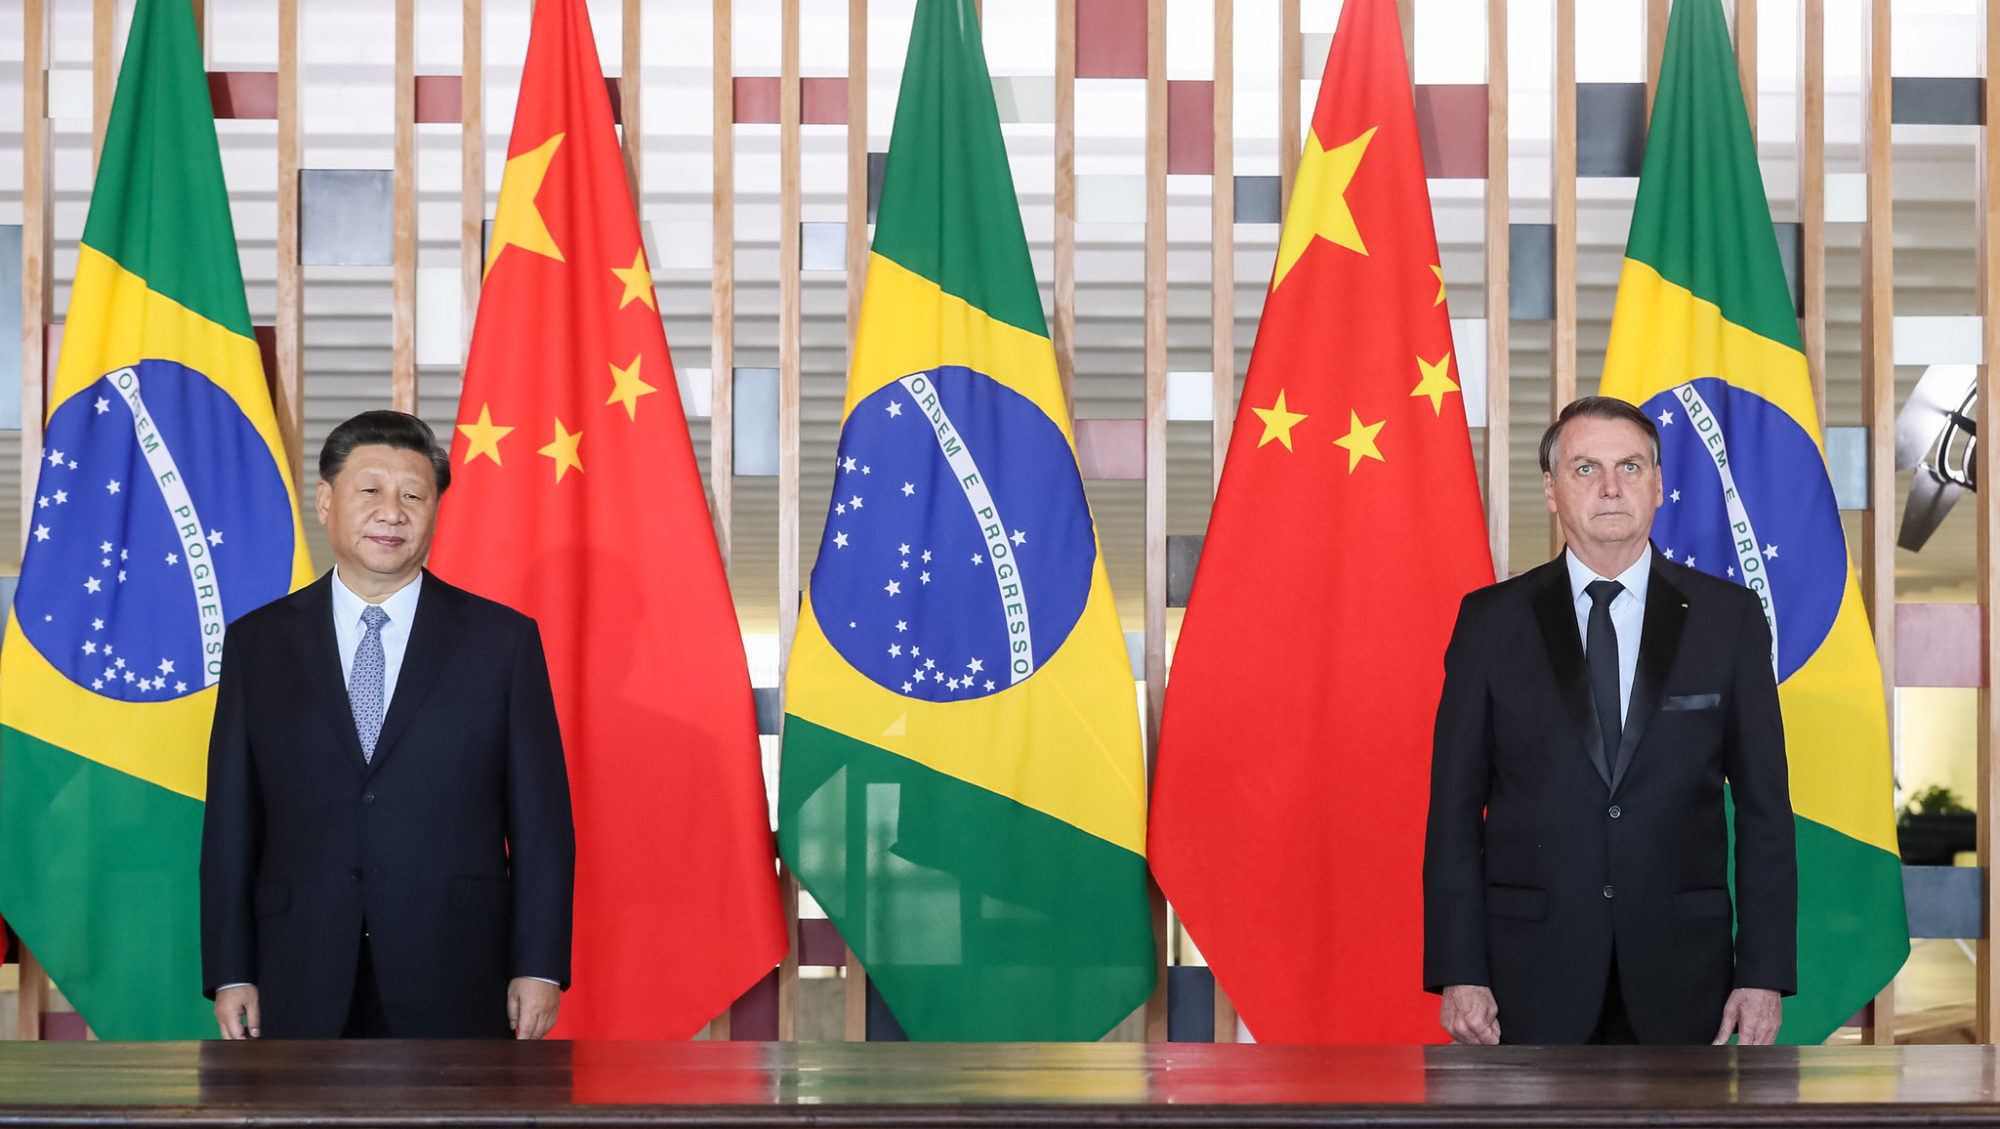 Chinese President Xi Jinping and Brazilian President Jair Bolsonaro at the 11th BRICS Summit in Brasilia.